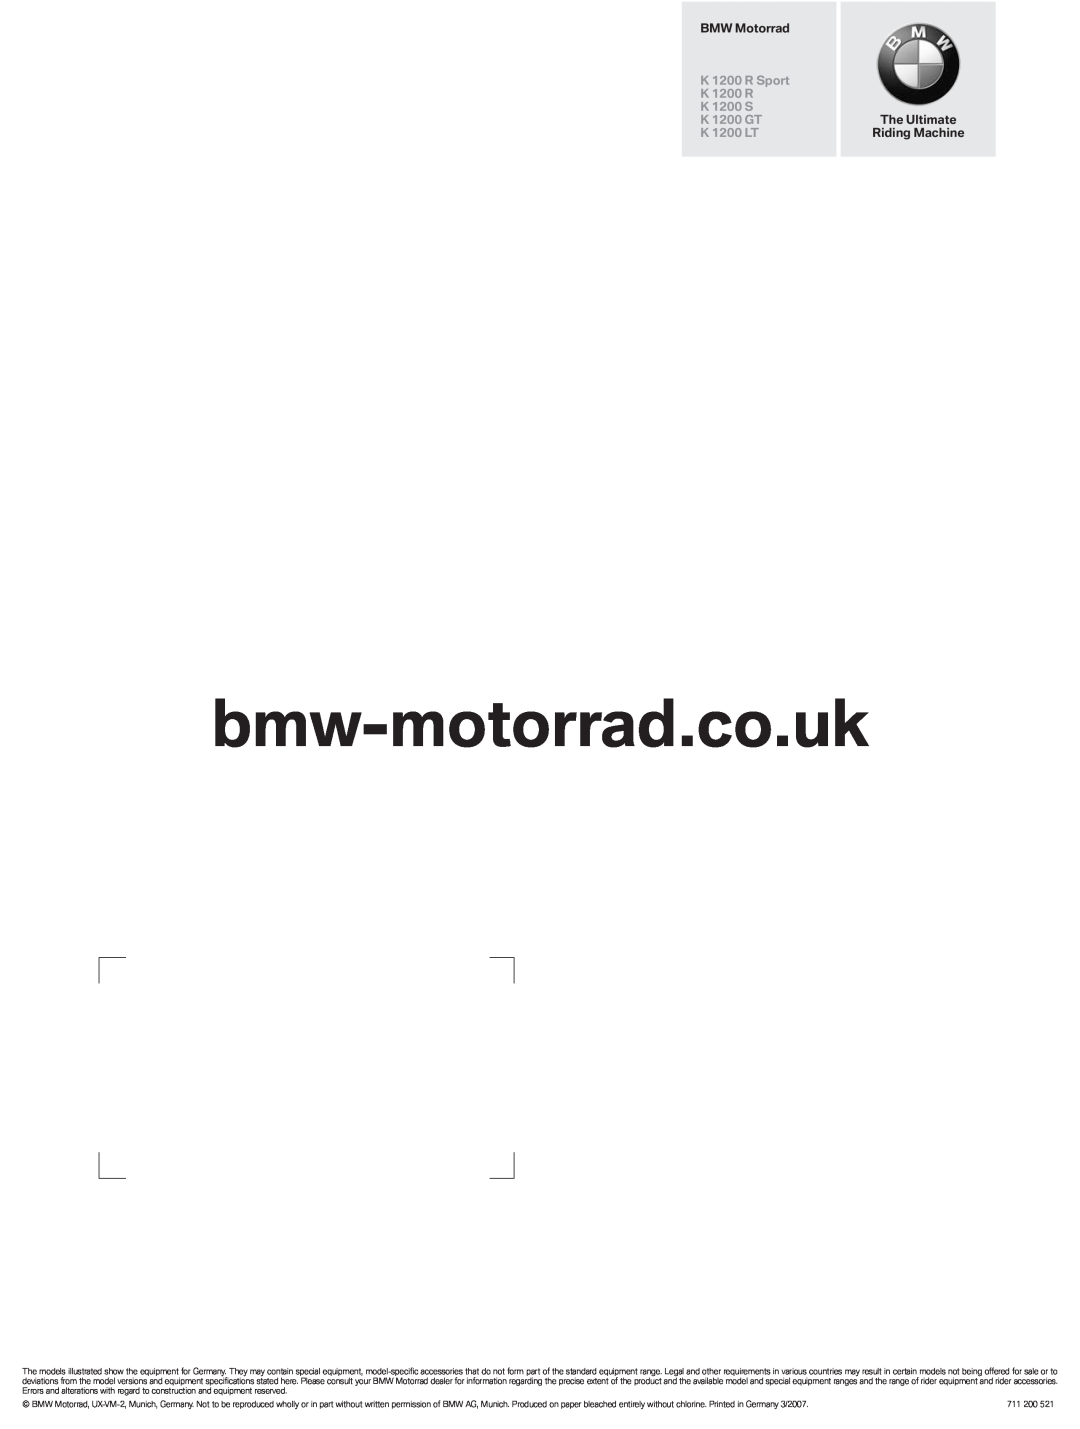 BMW K 1200 GT manual bmw-motorrad.co.uk, BMW Motorrad, K 1200 R Sport, K 1200 S, The Ultimate, K 1200 LT, Riding Machine 